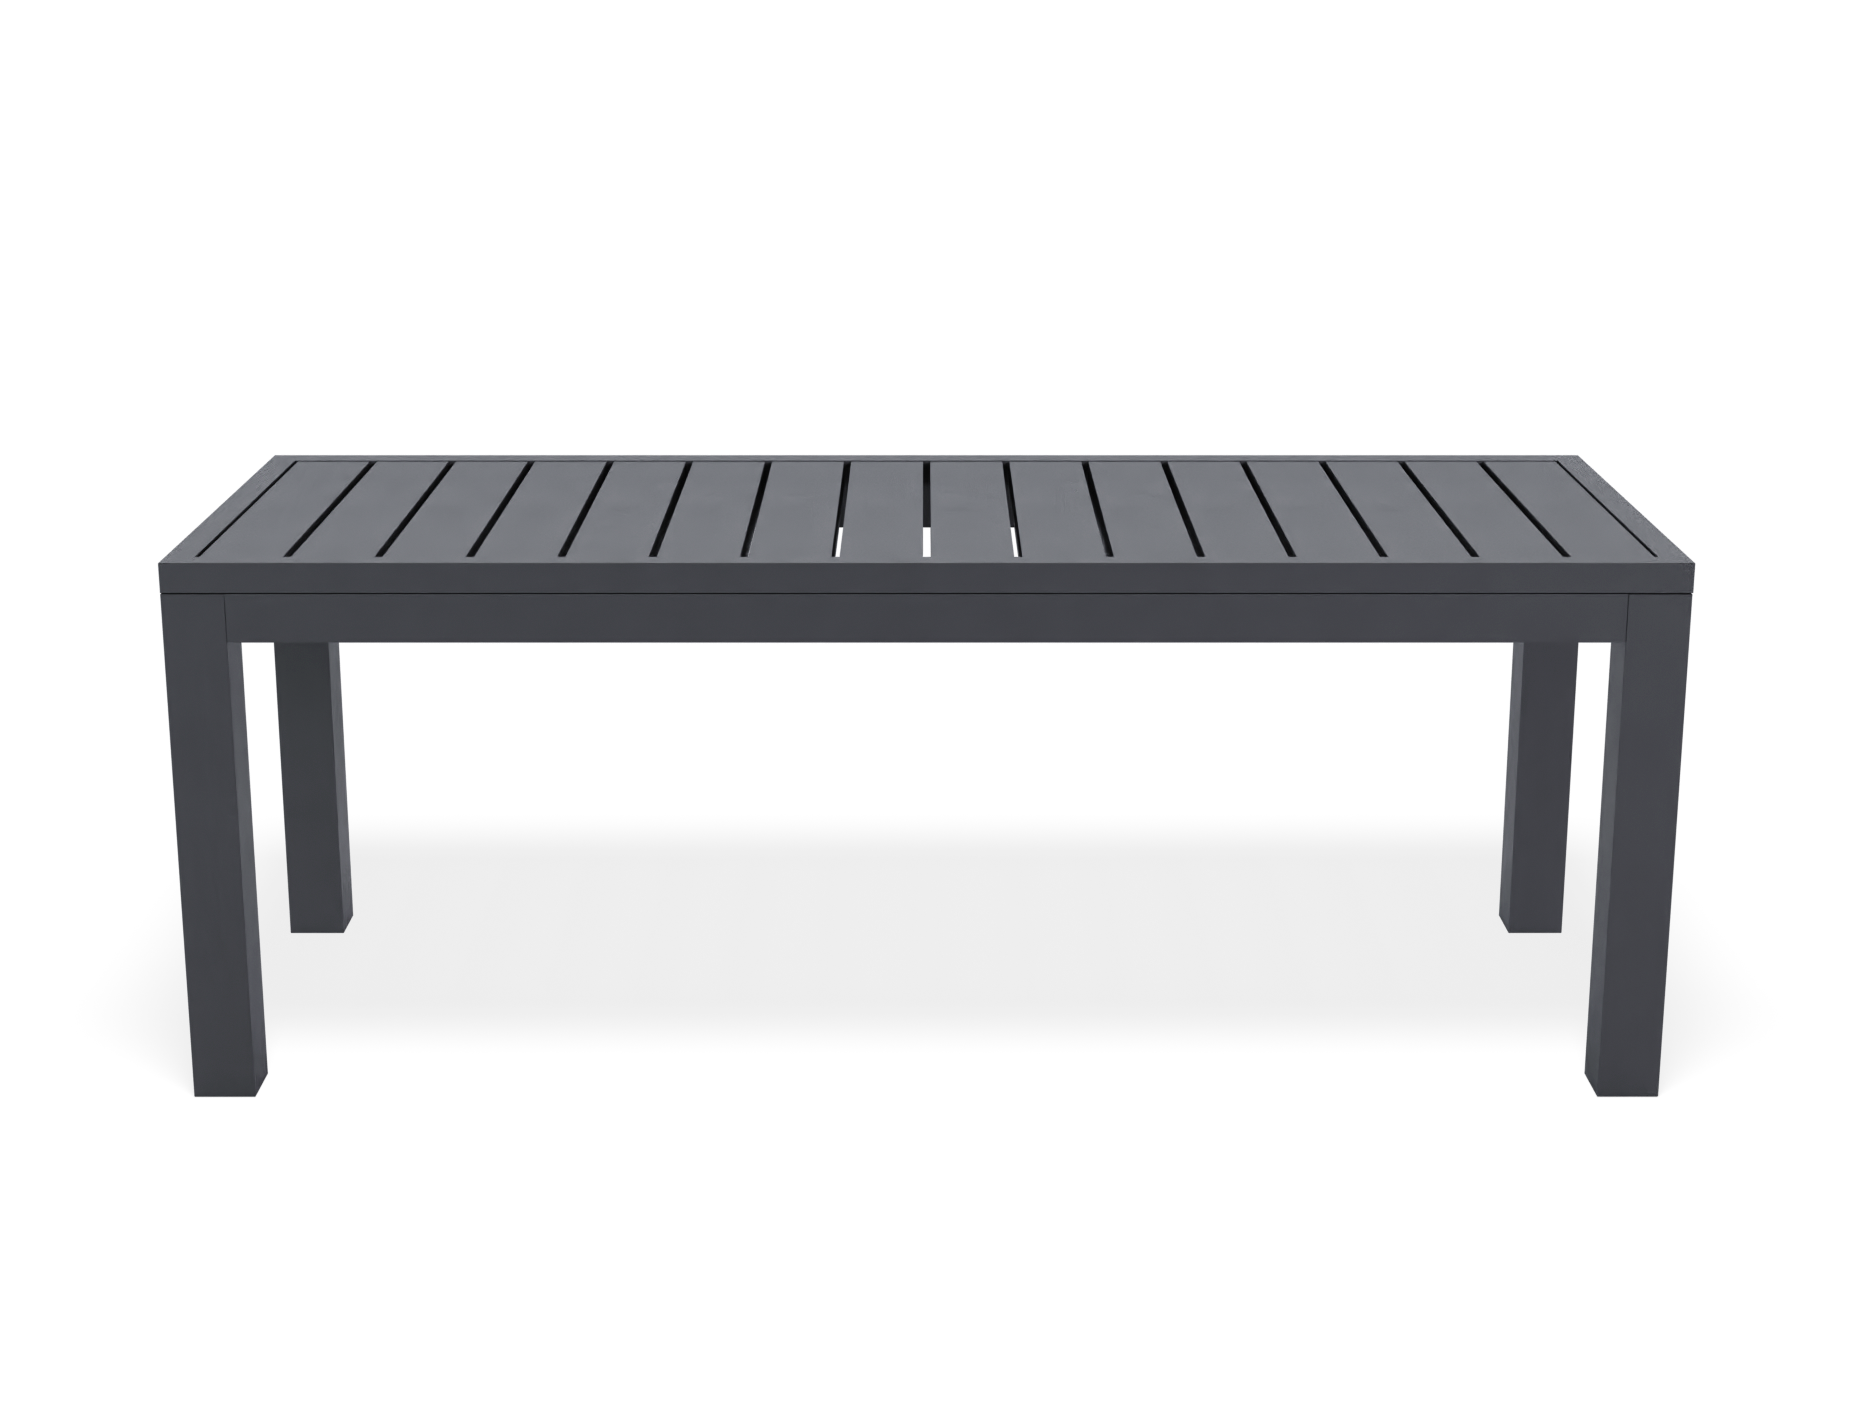 Halki Outdoor Bench Seat - 1.2m - Charcoal